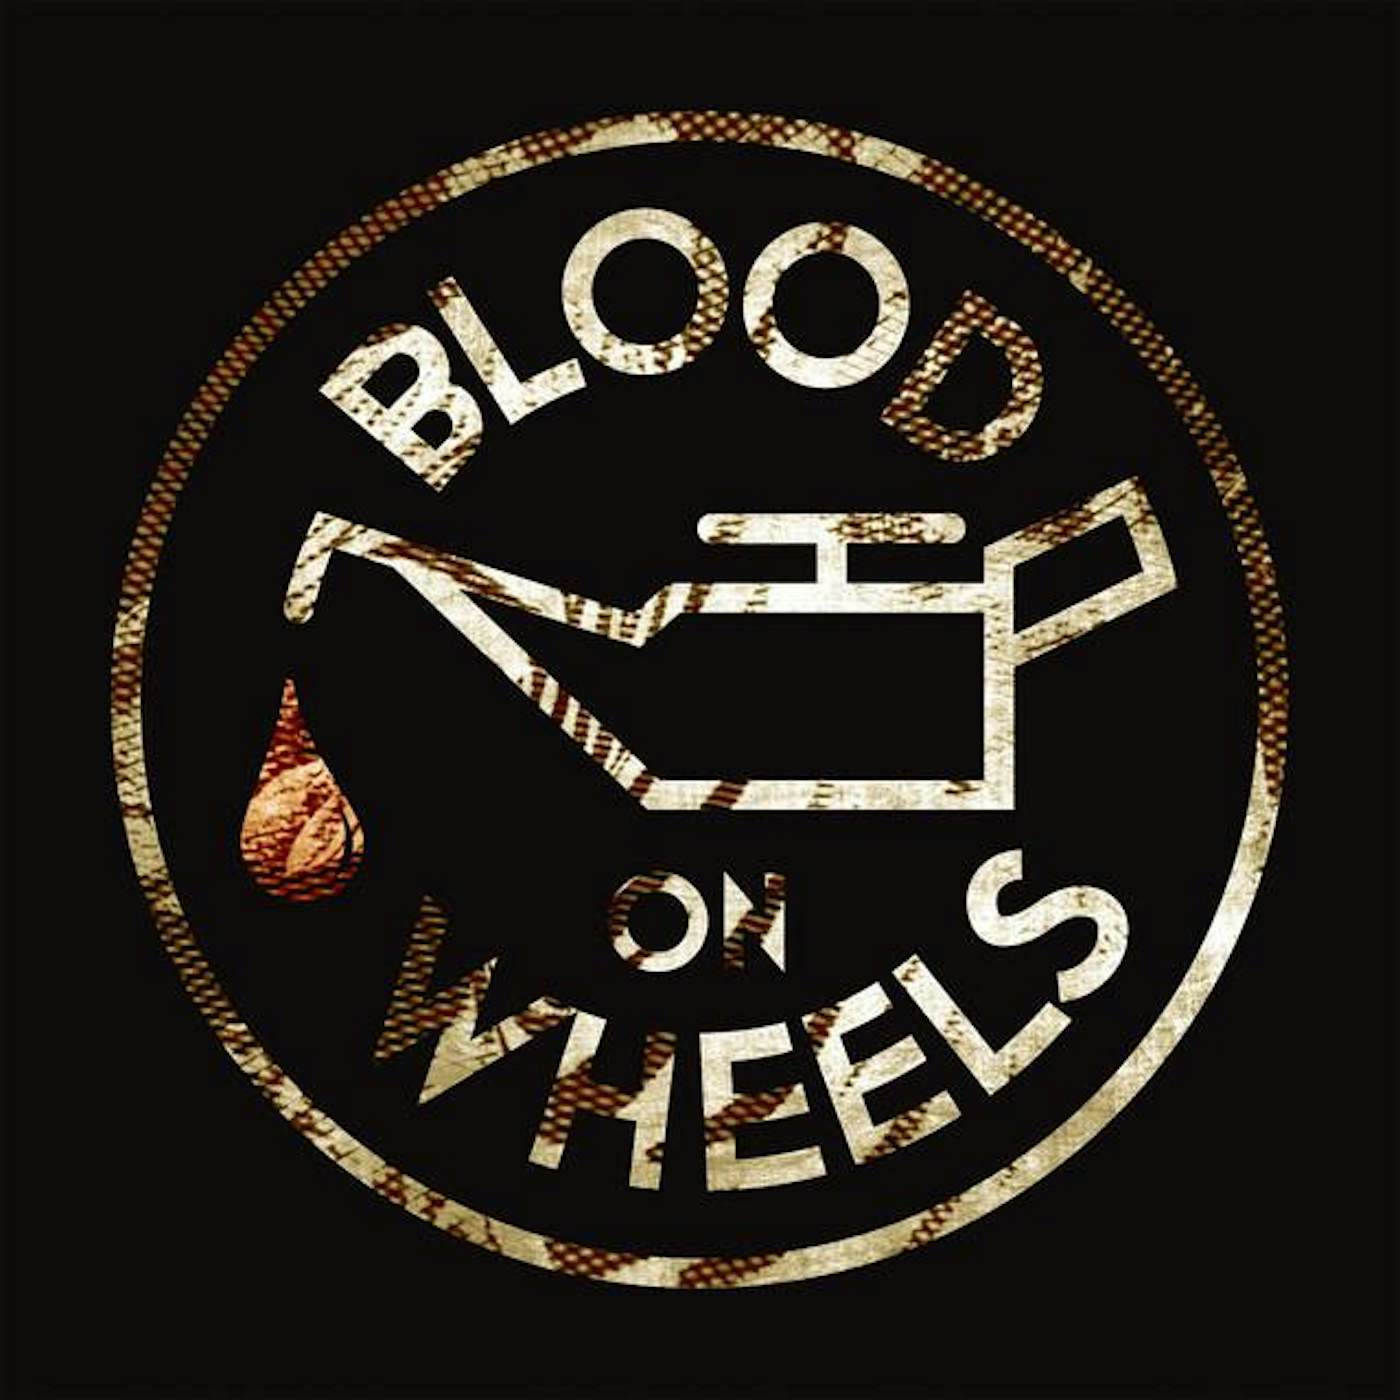 Blood On Wheels